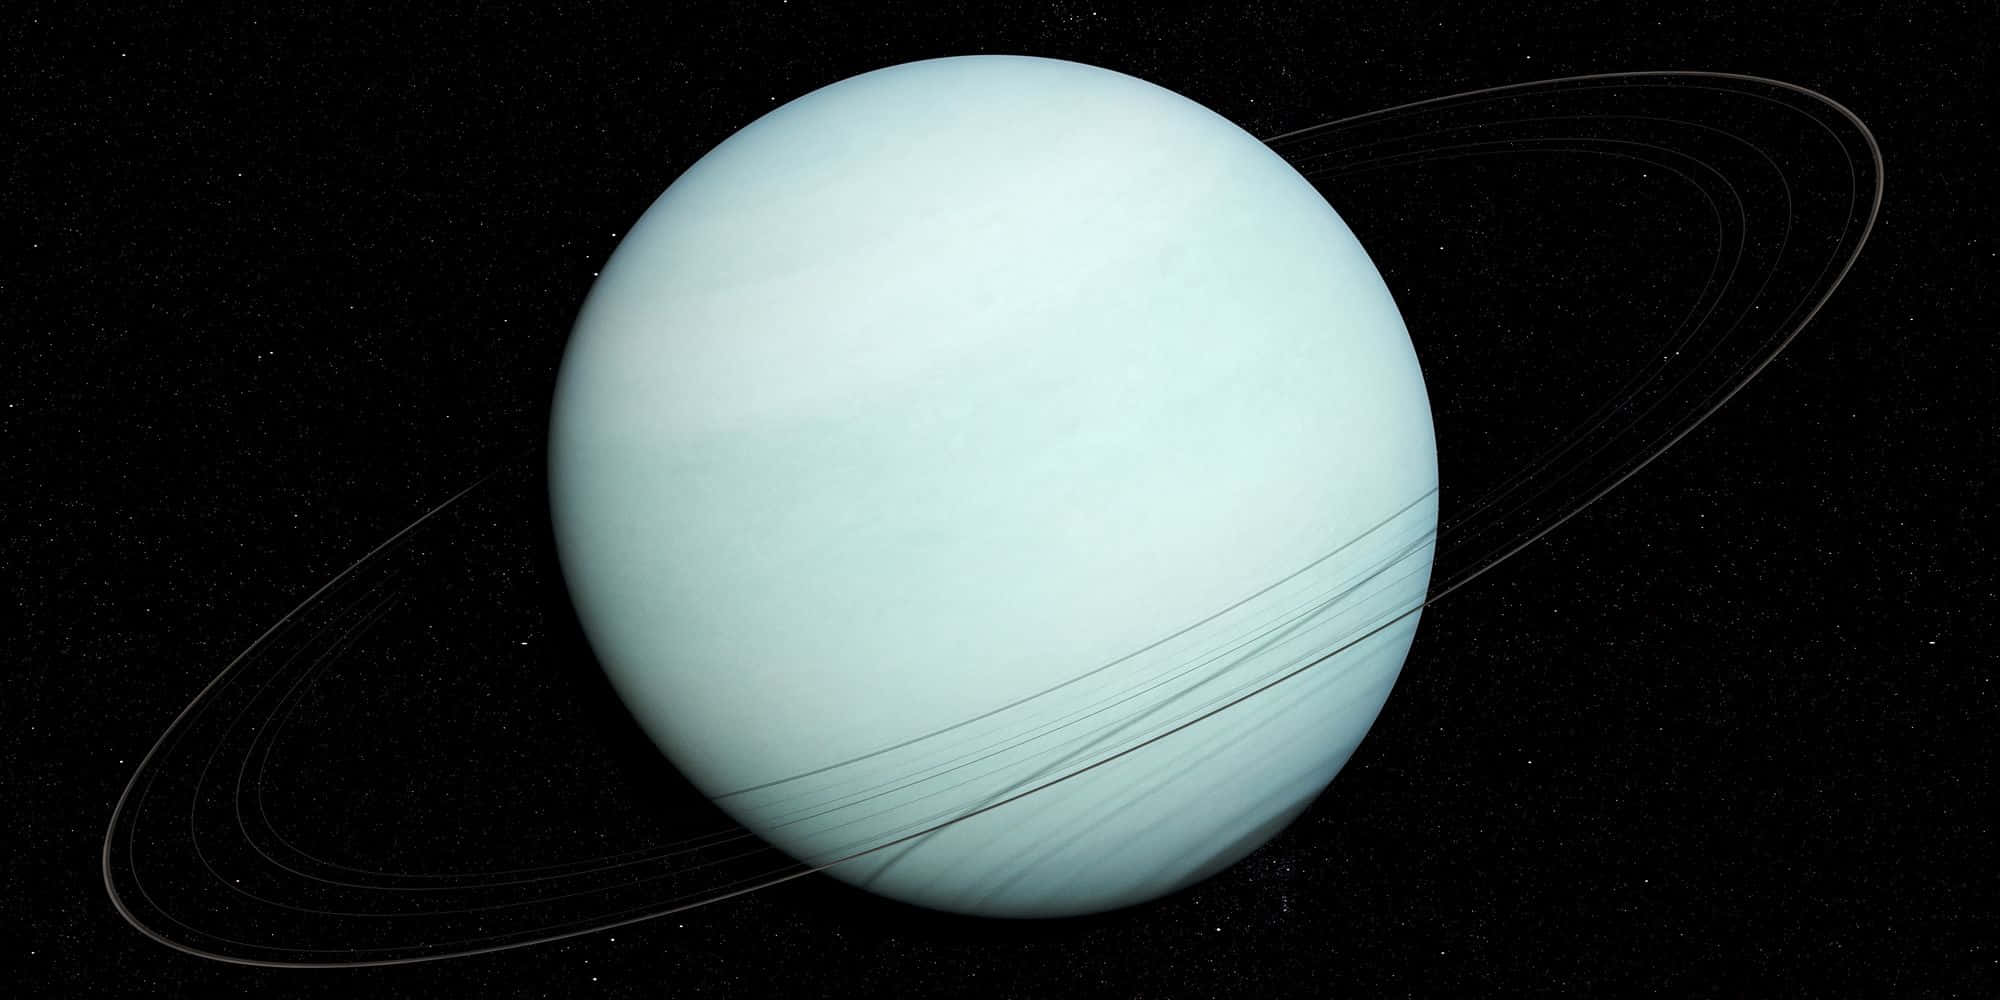 Caption: Majestic Uranus in High Resolution